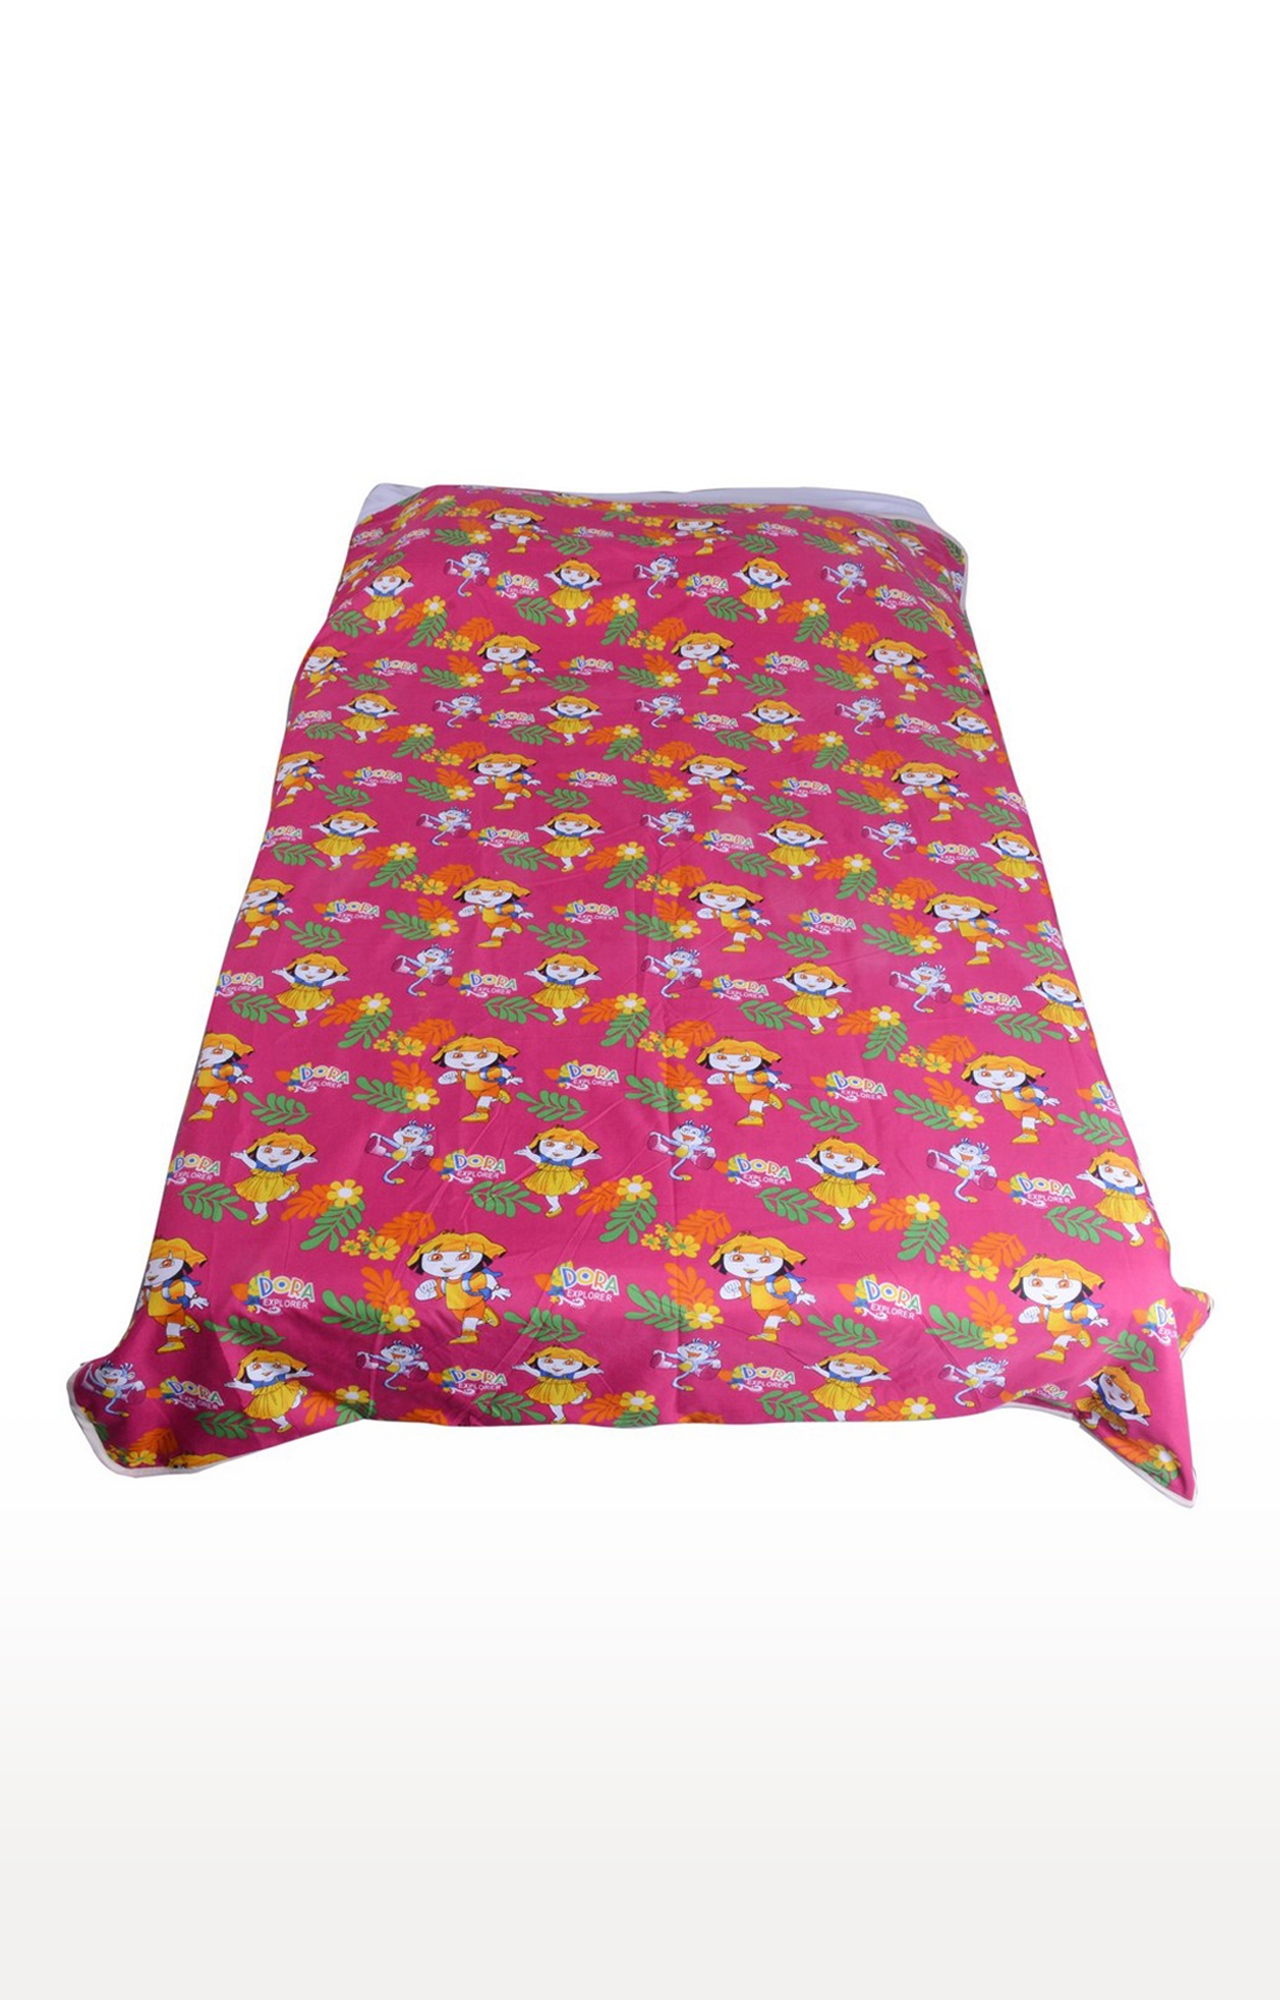 Dora Explorer Printed Cotton 3 Layer Single Bed Quilt Dohar